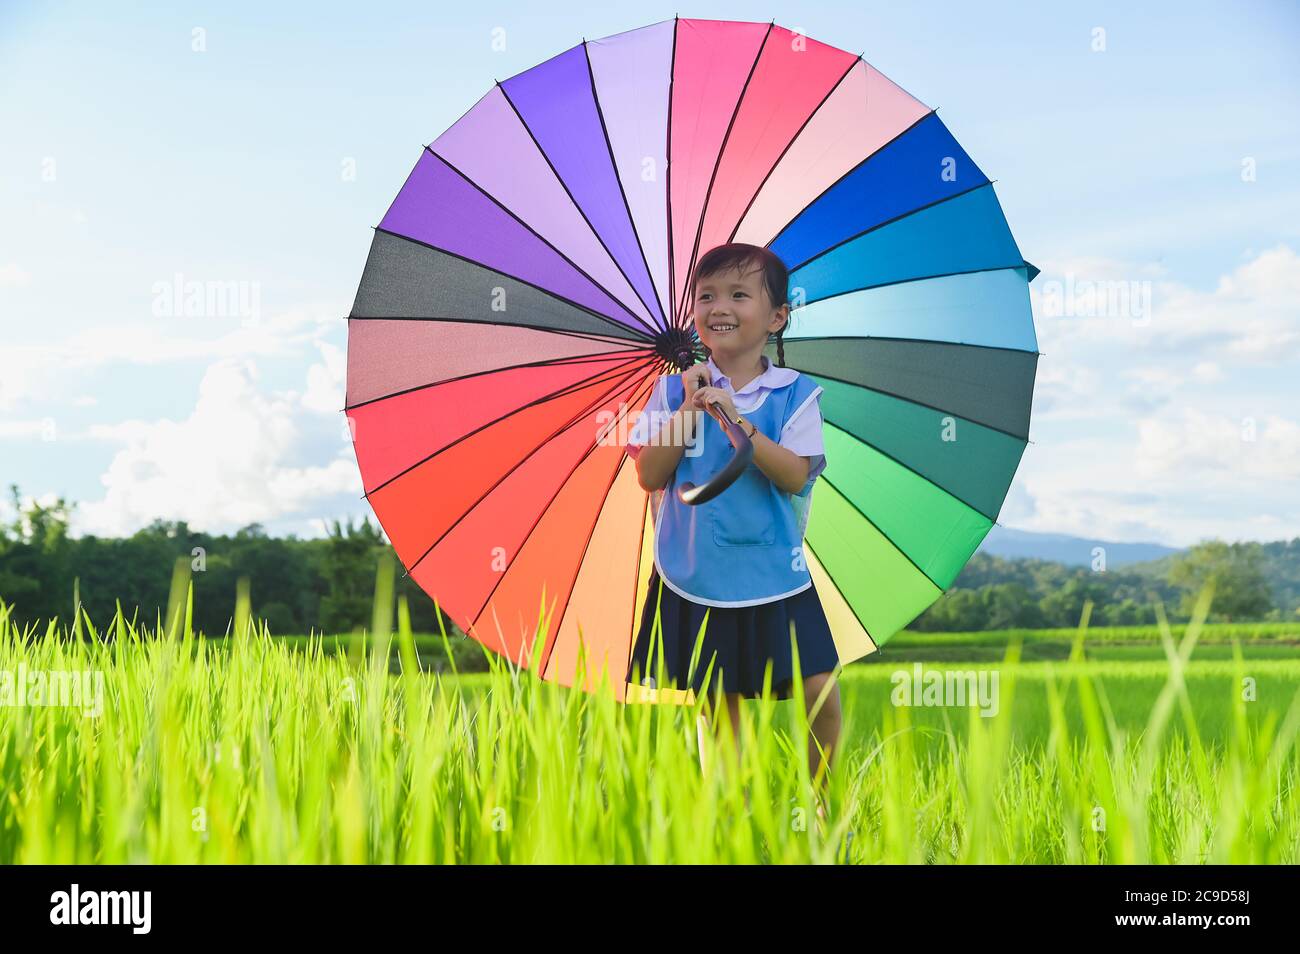 Little girl under colorful umbrella in rice field scene Stock Photo